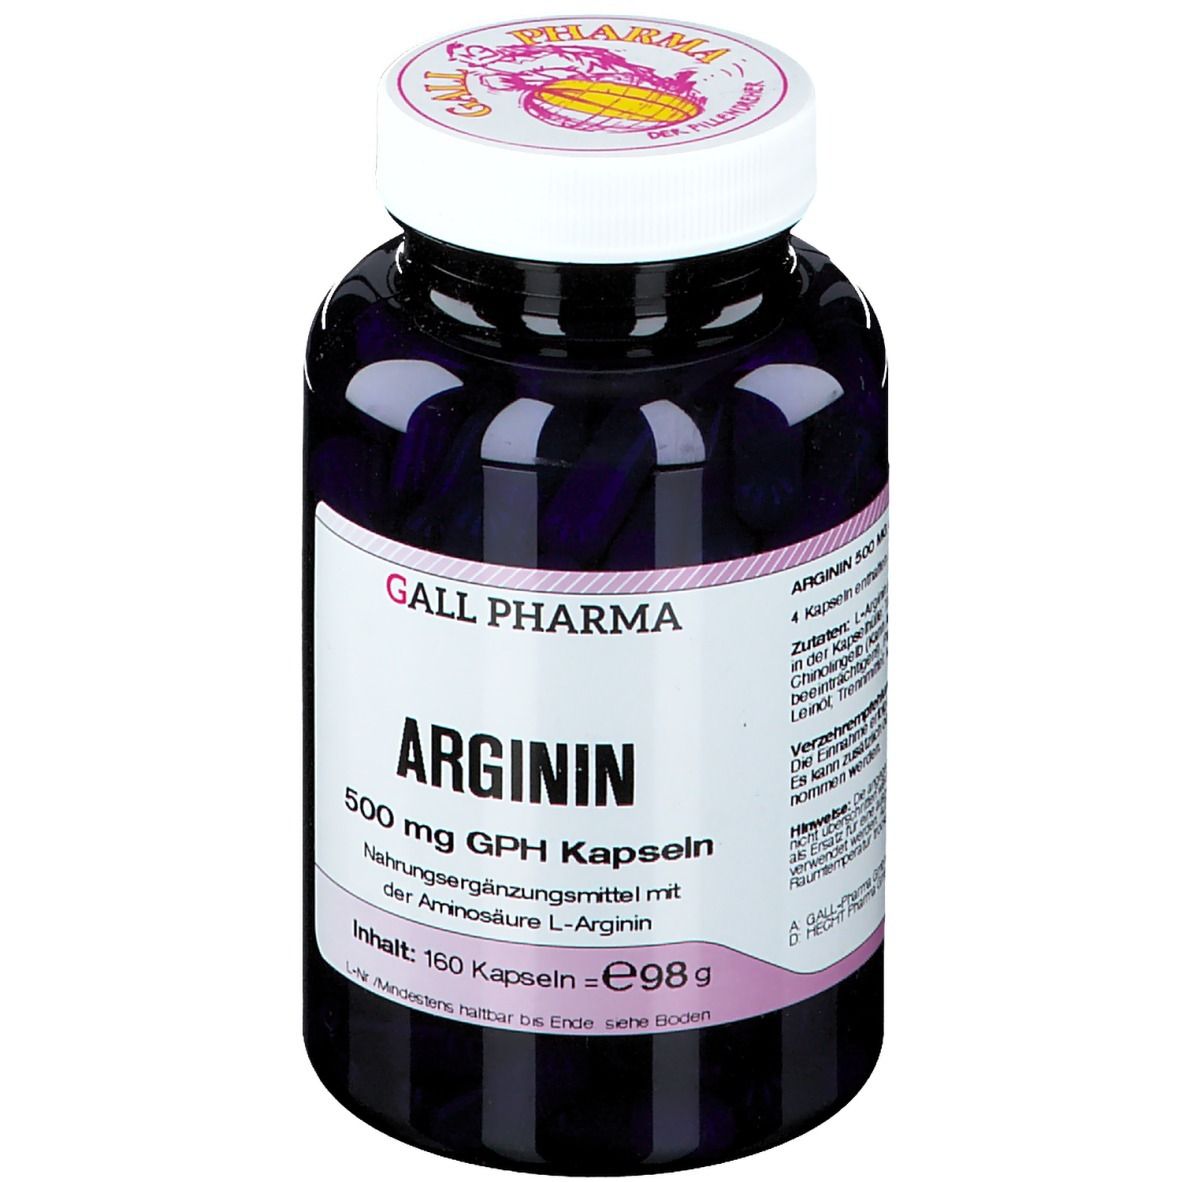 Arginin 500 mg GPH